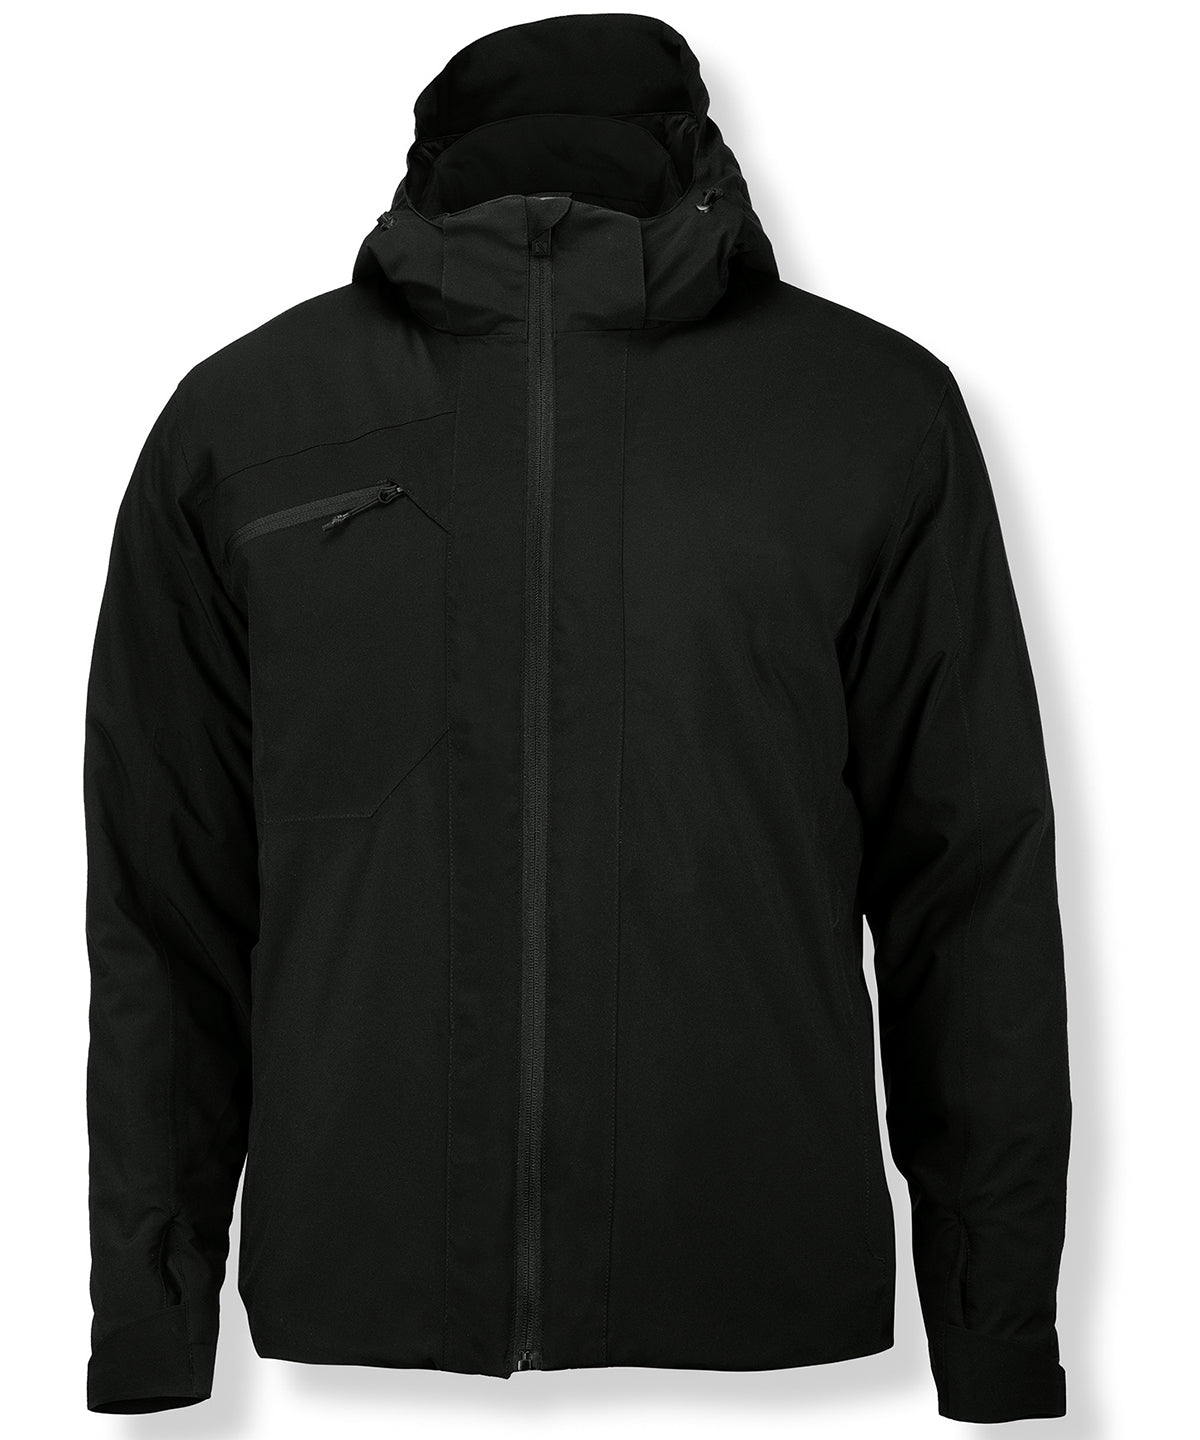 Personalised Jackets - Black Nimbus Fairview – warm performance jacket